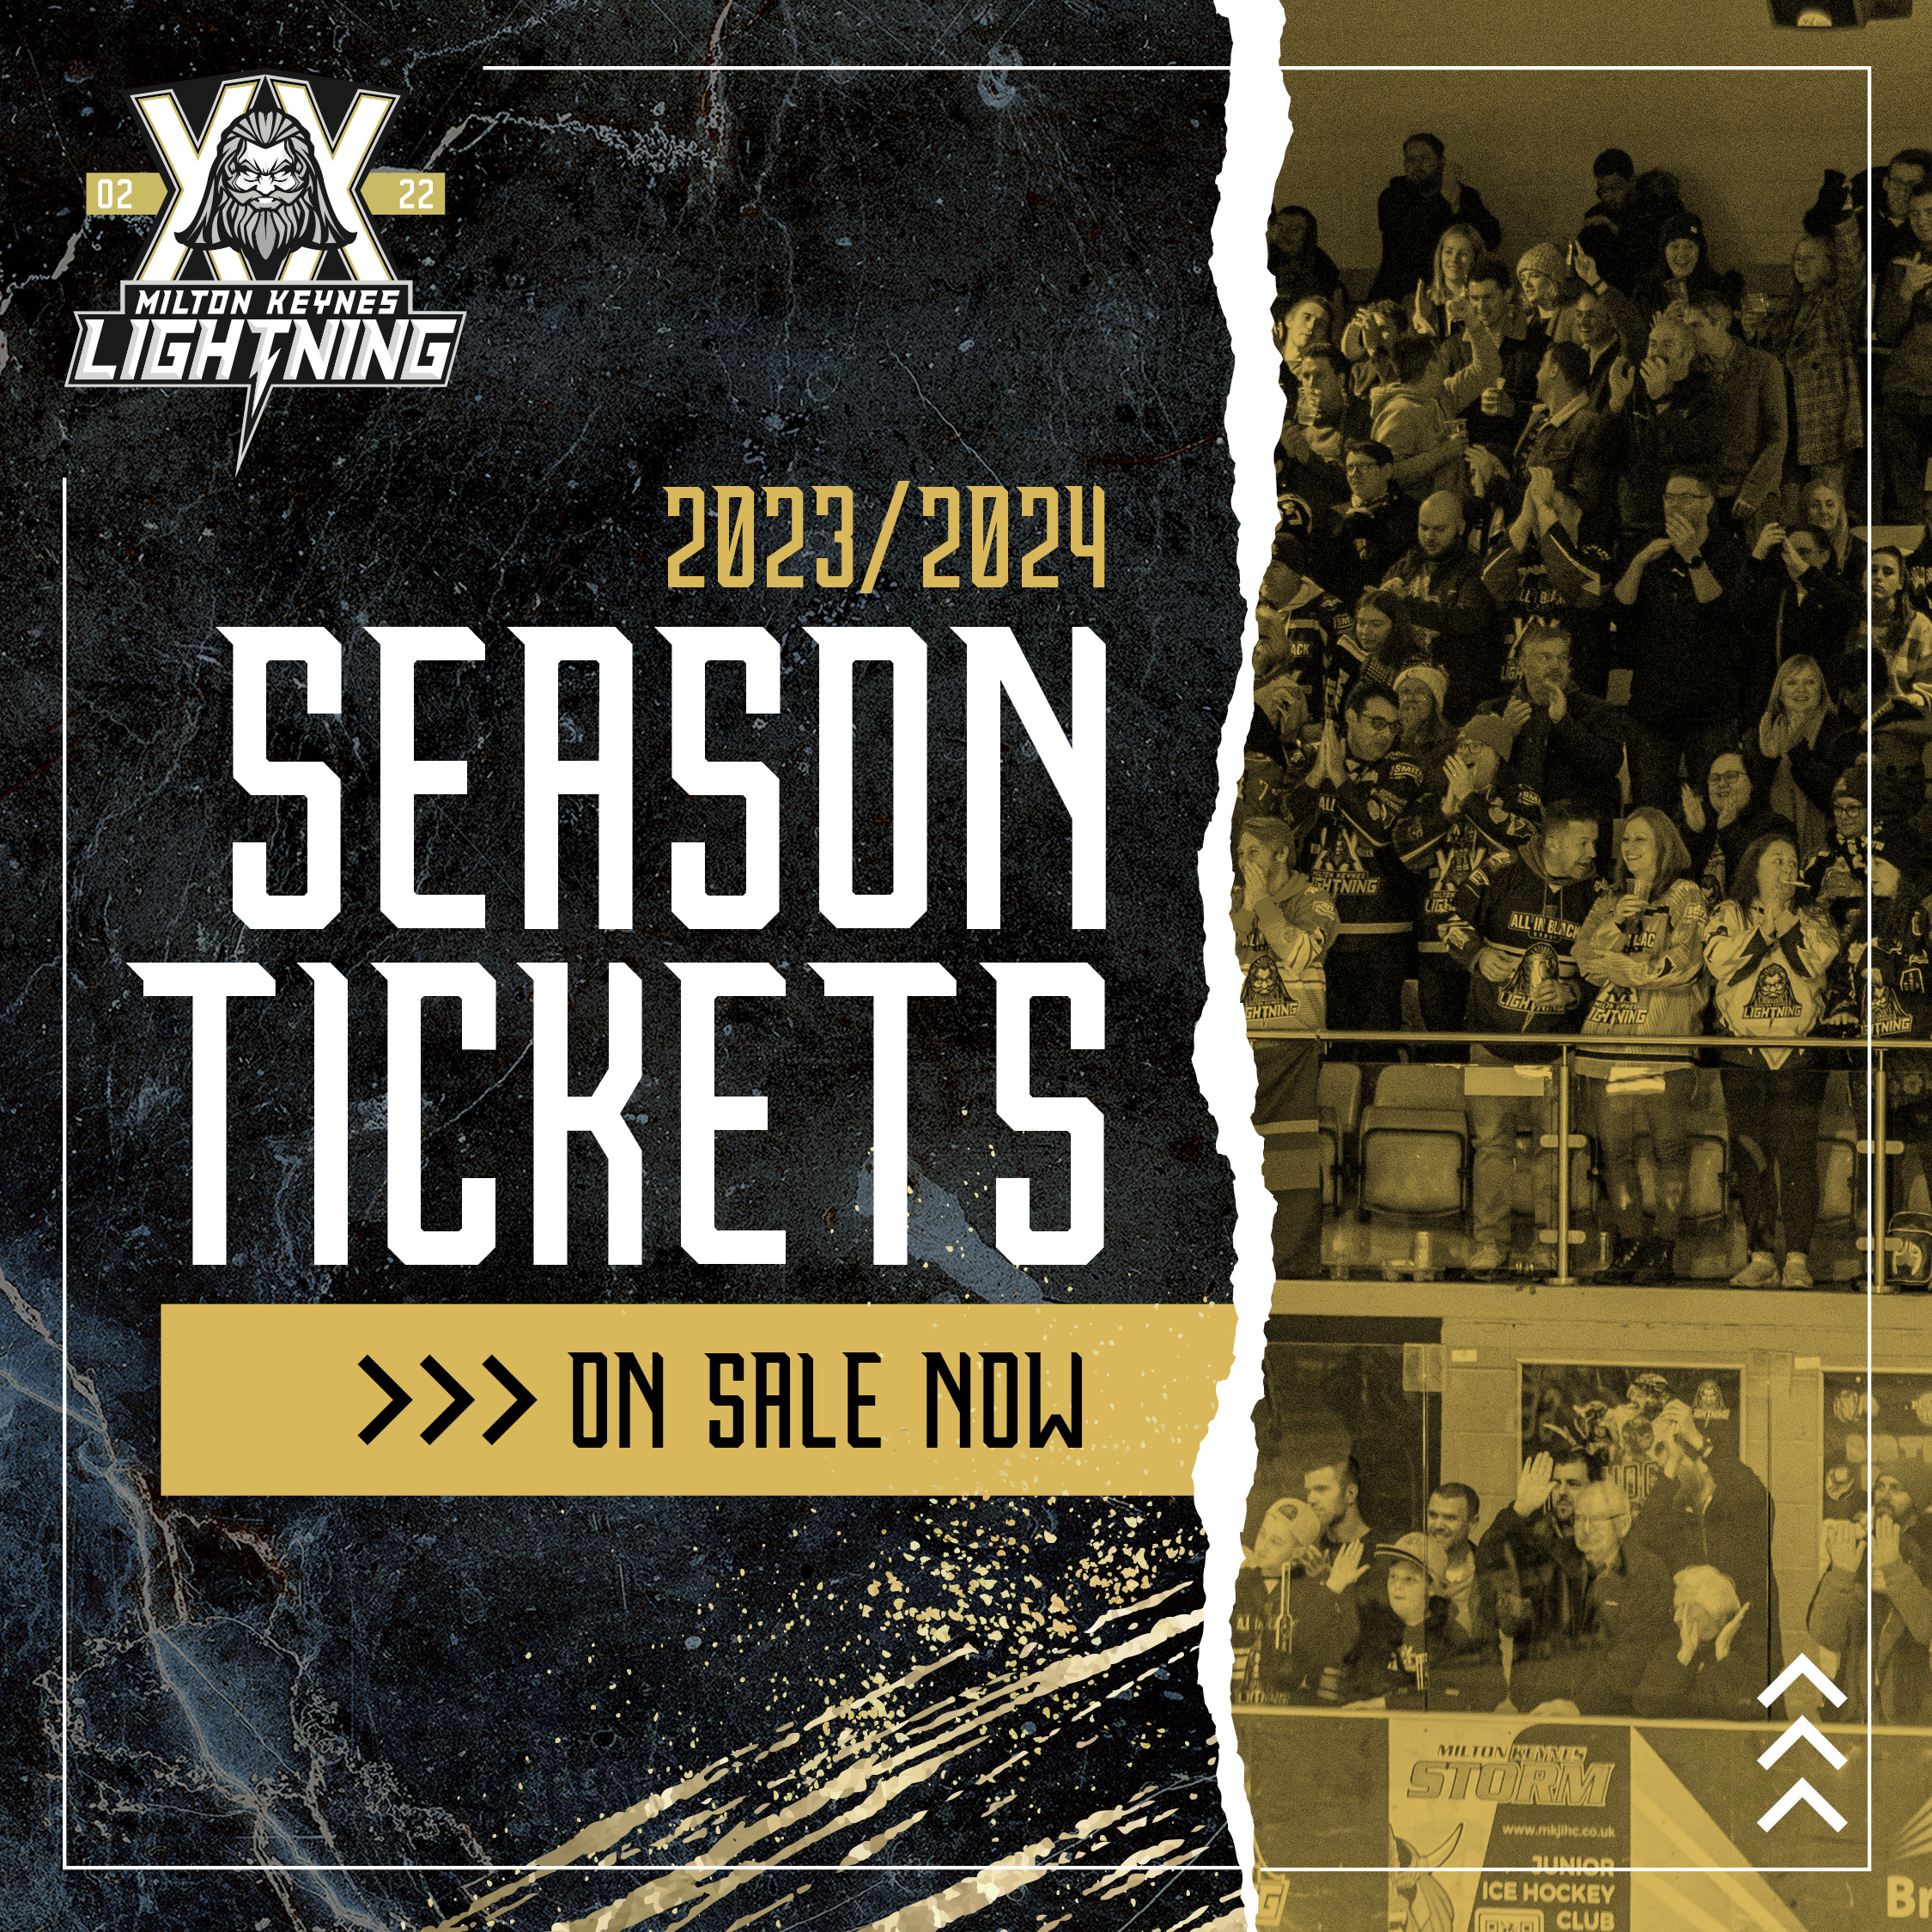 MK Lightning Season tickets on sale